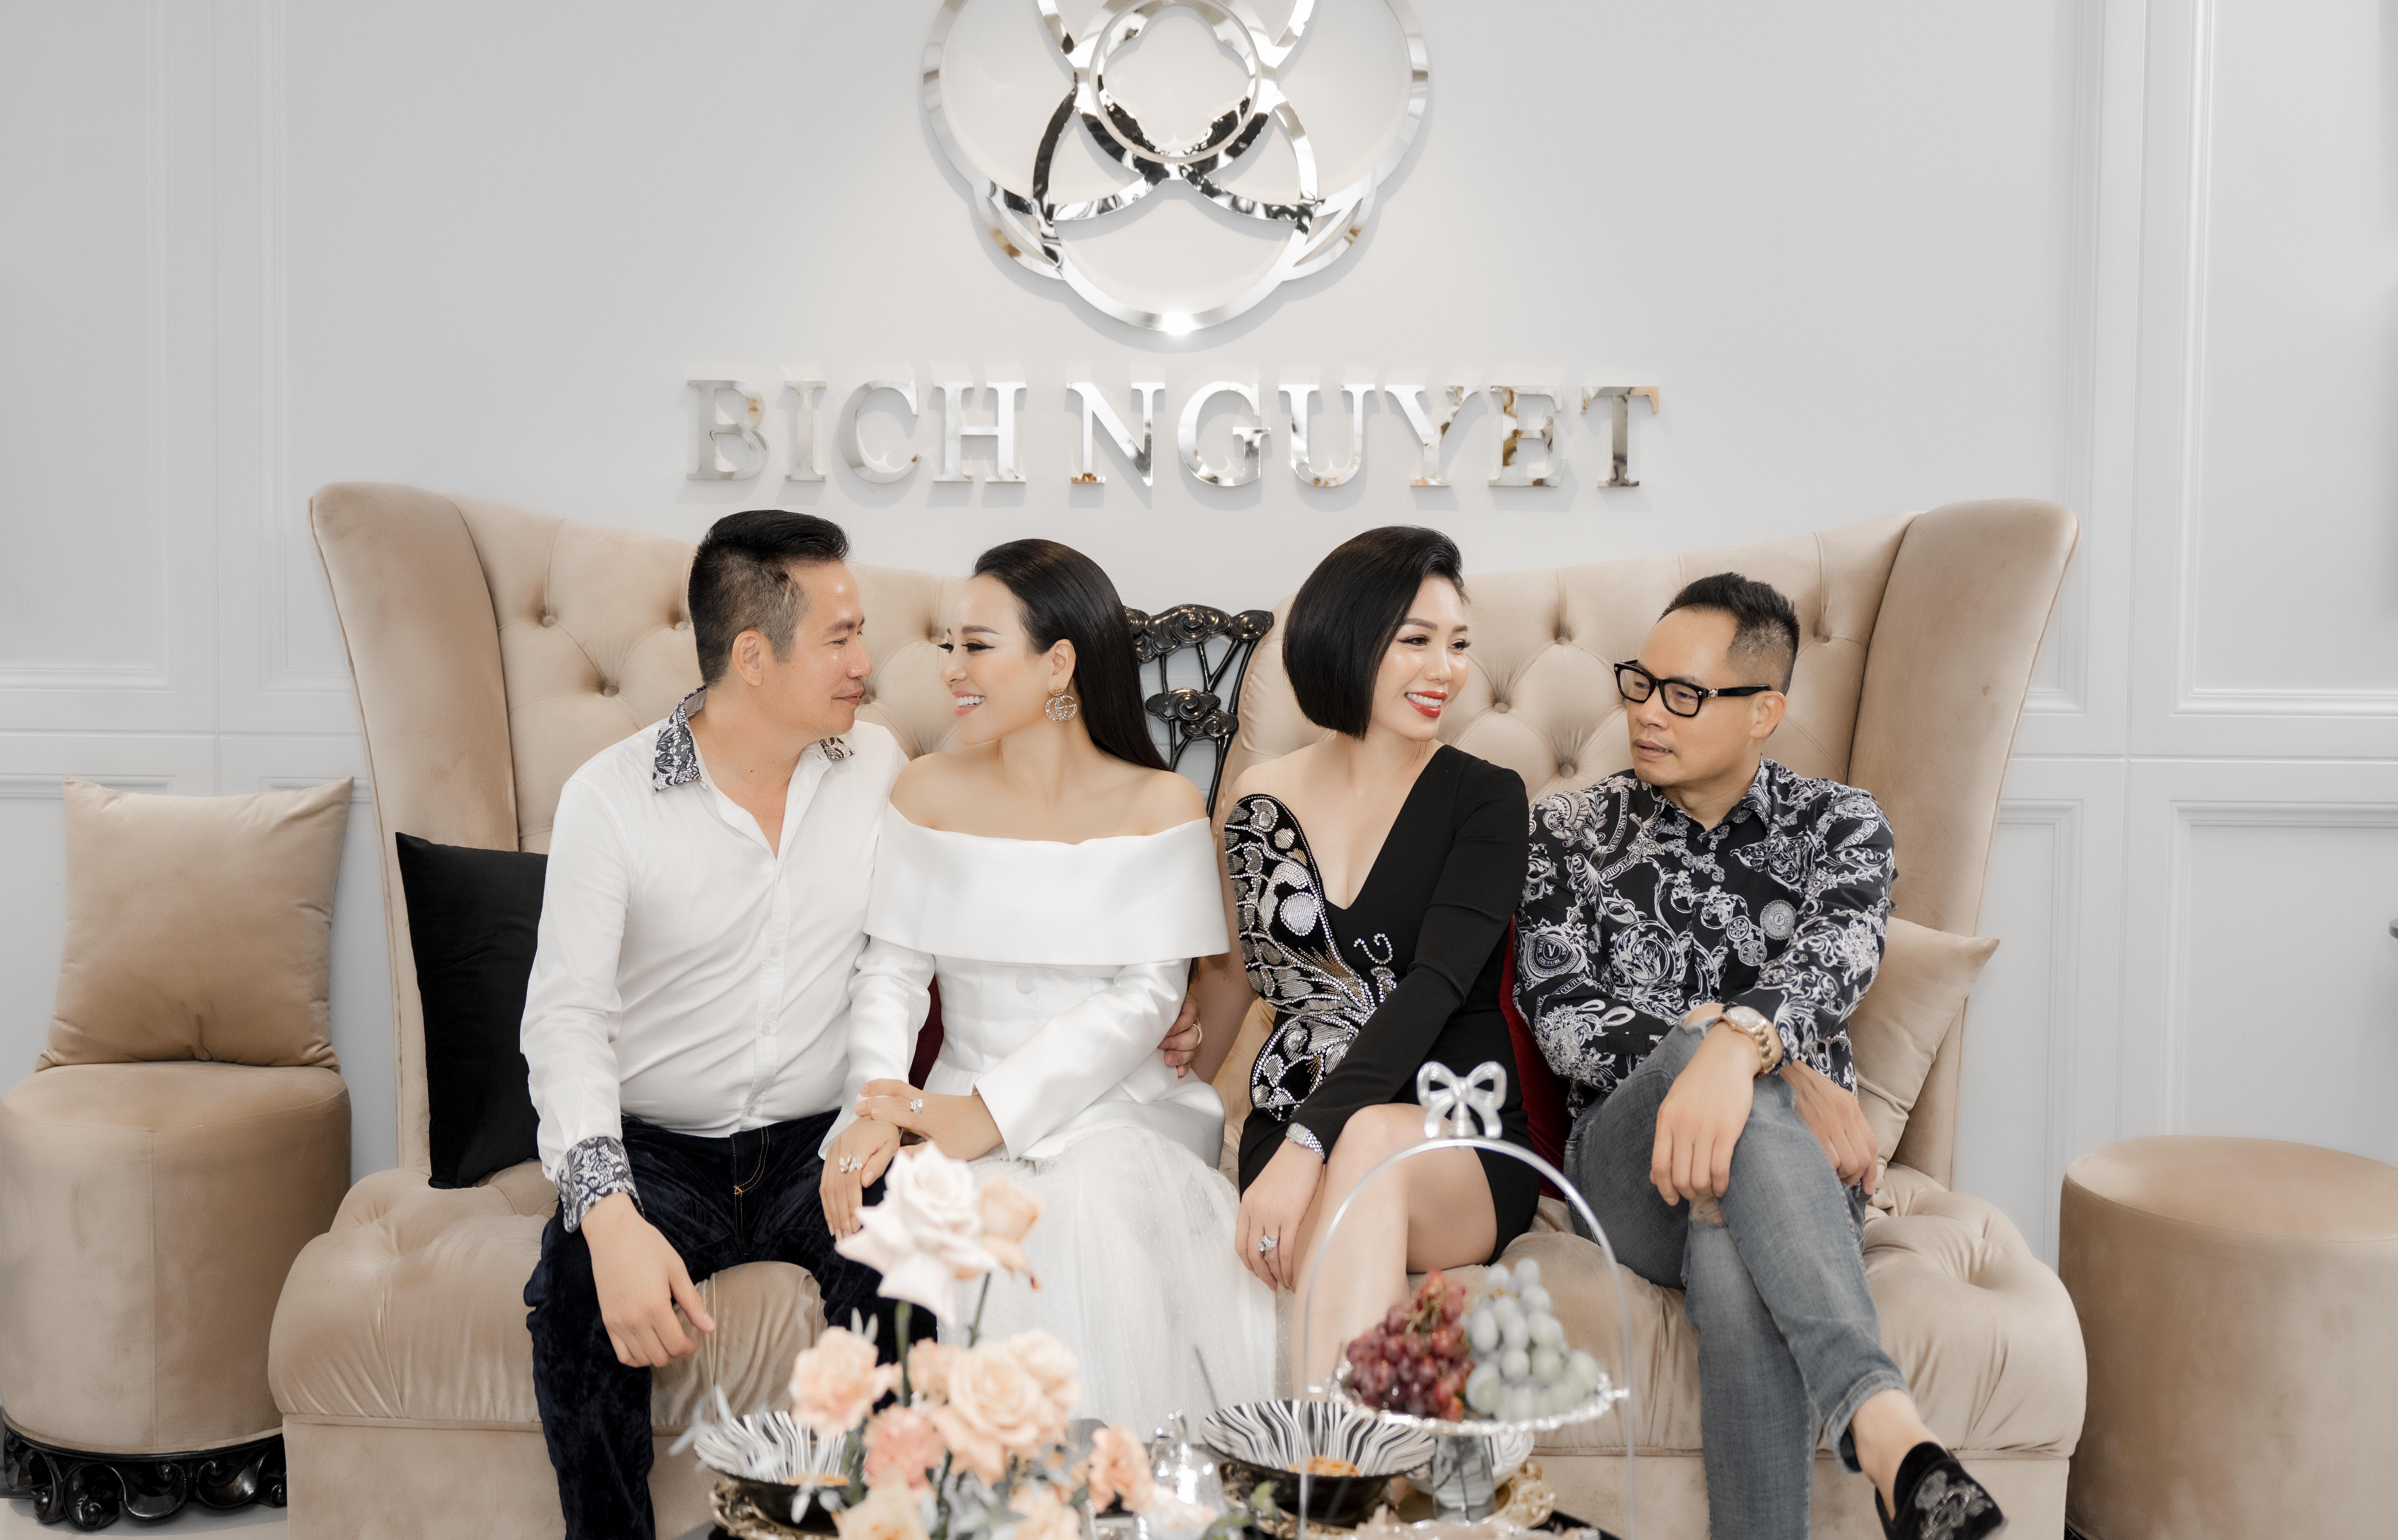 Bich Nguyet Beauty Clinic, Boost up Vietnamese Beauty, Quang Hà